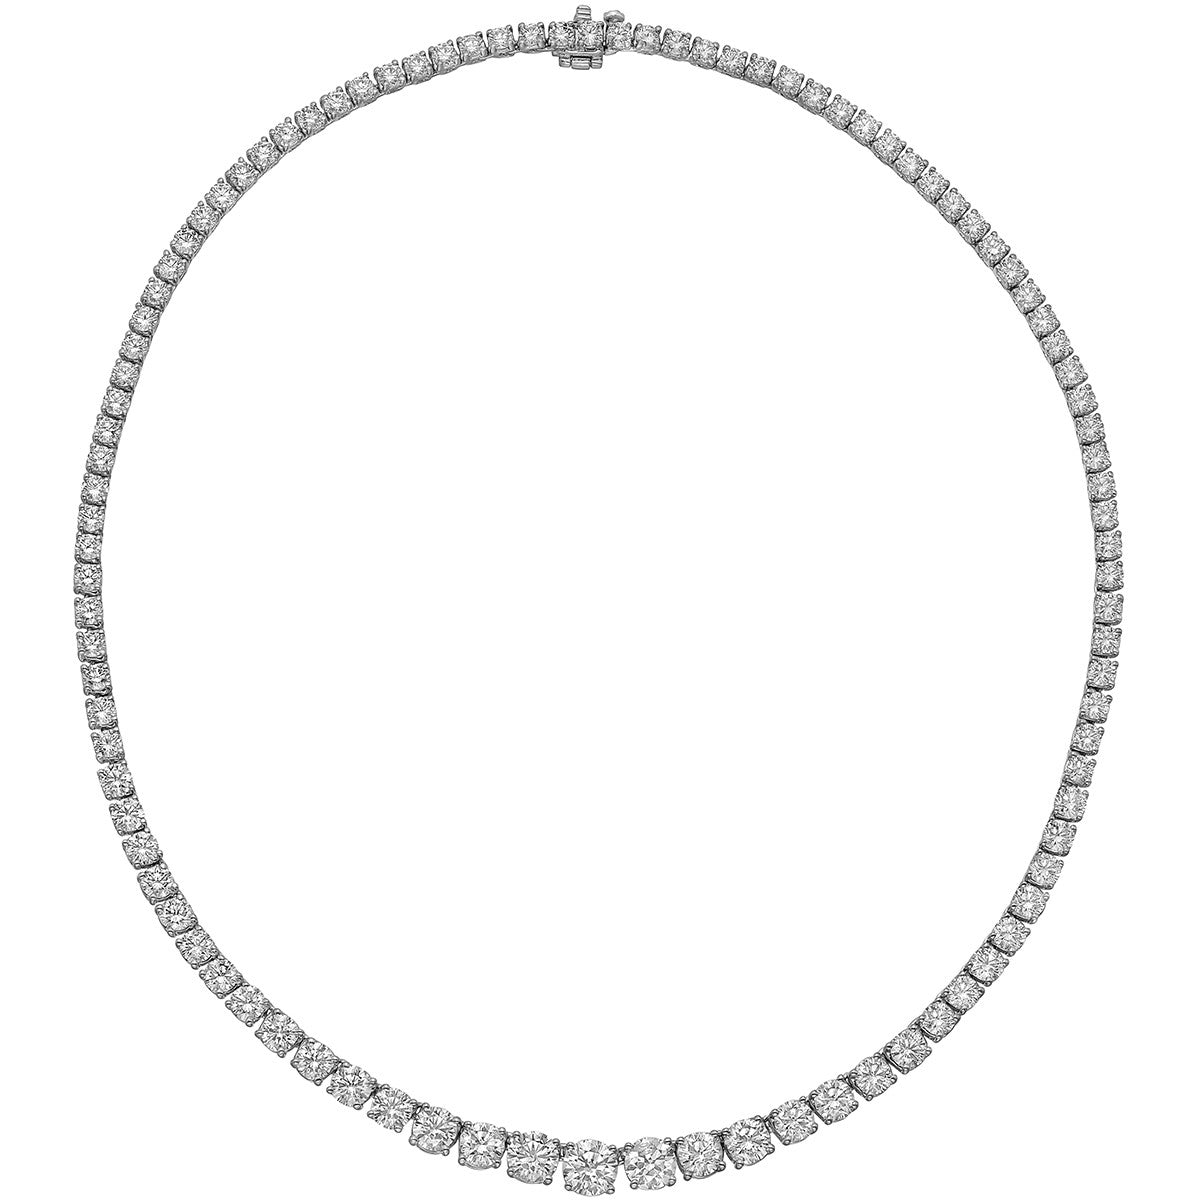 Greenleaf & Crosby - Graduating Diamond Riviera Necklace (13.11ct)